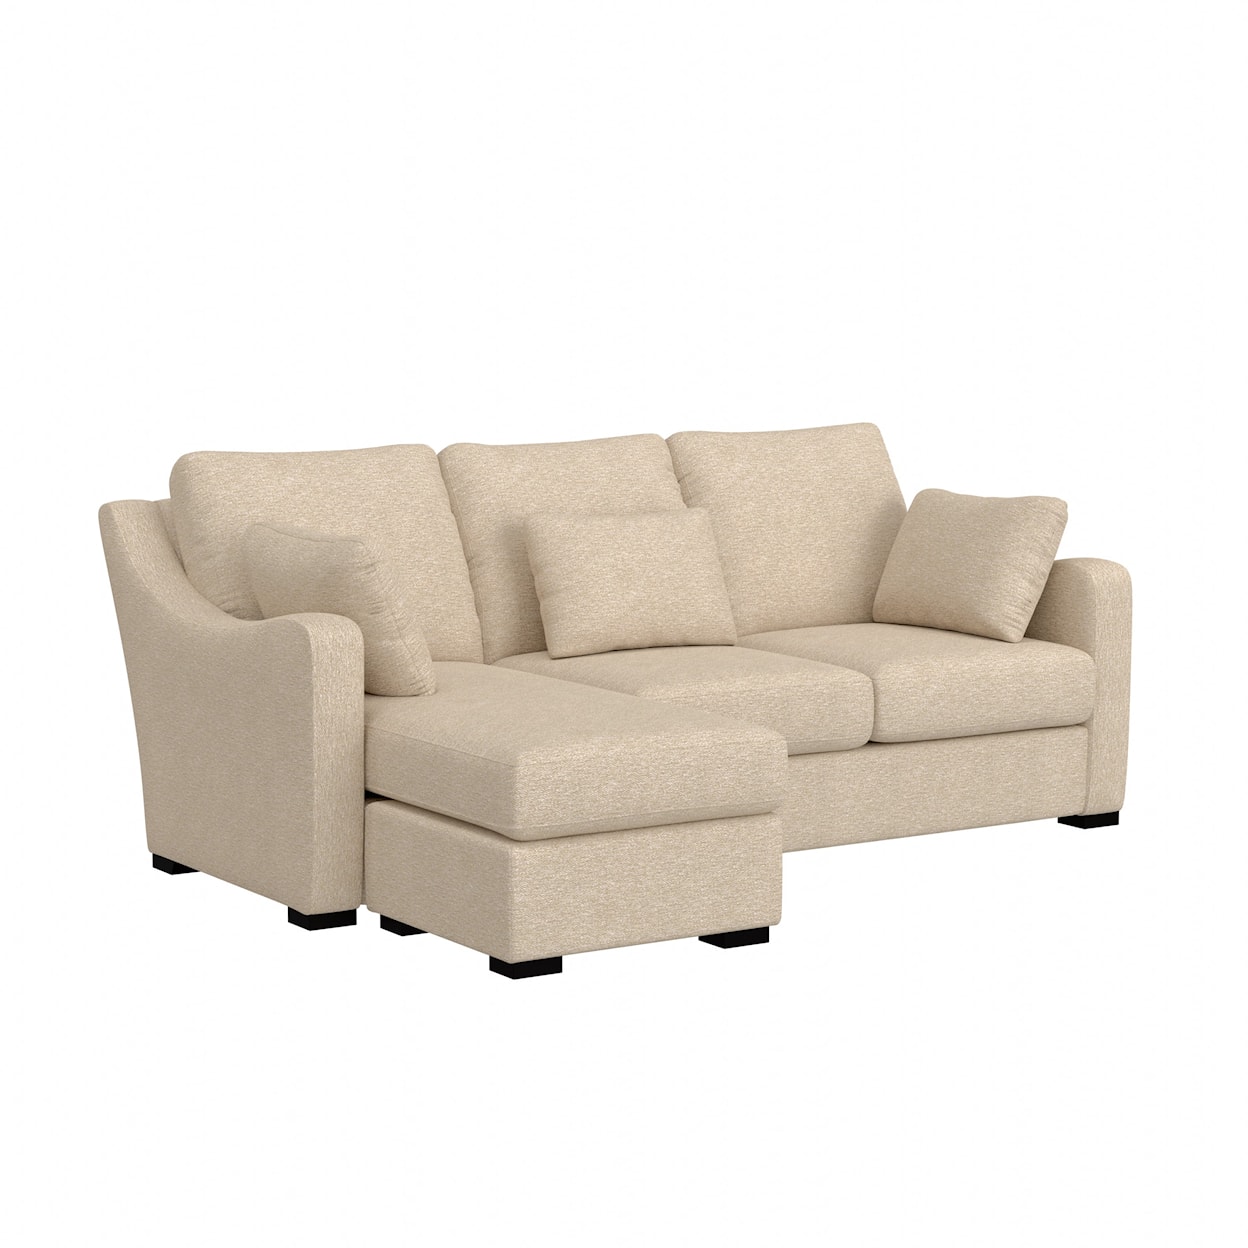 Hillsdale York Sectional Sofa